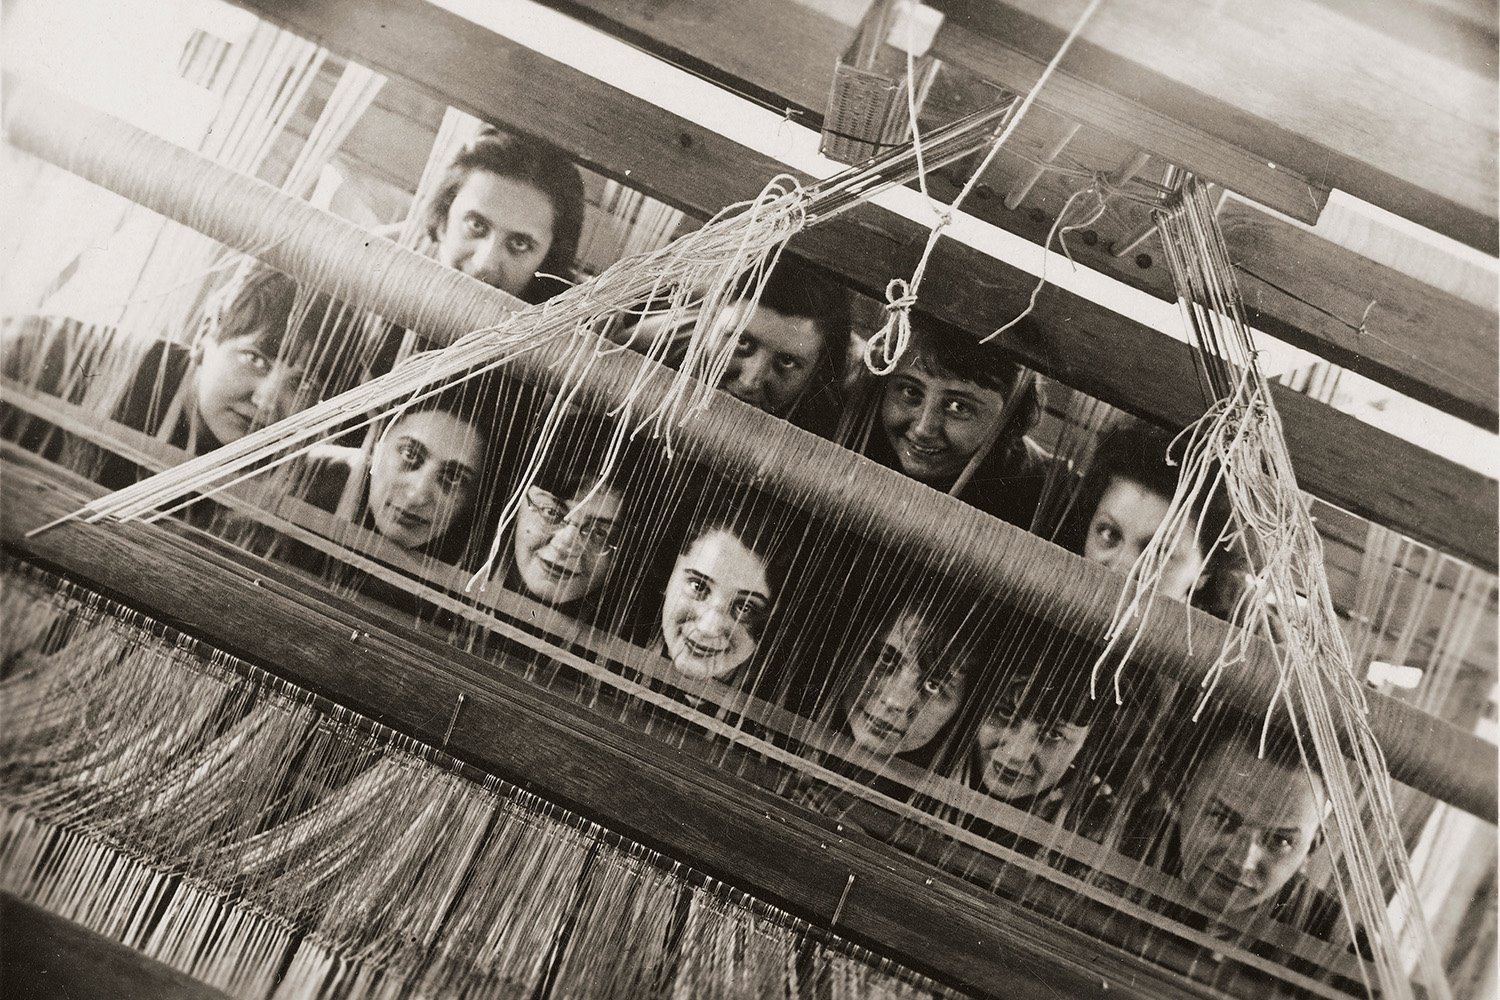 22 VDM-Women-In-Design-Bauhaus-portrait-weavers-behind-loom-1928